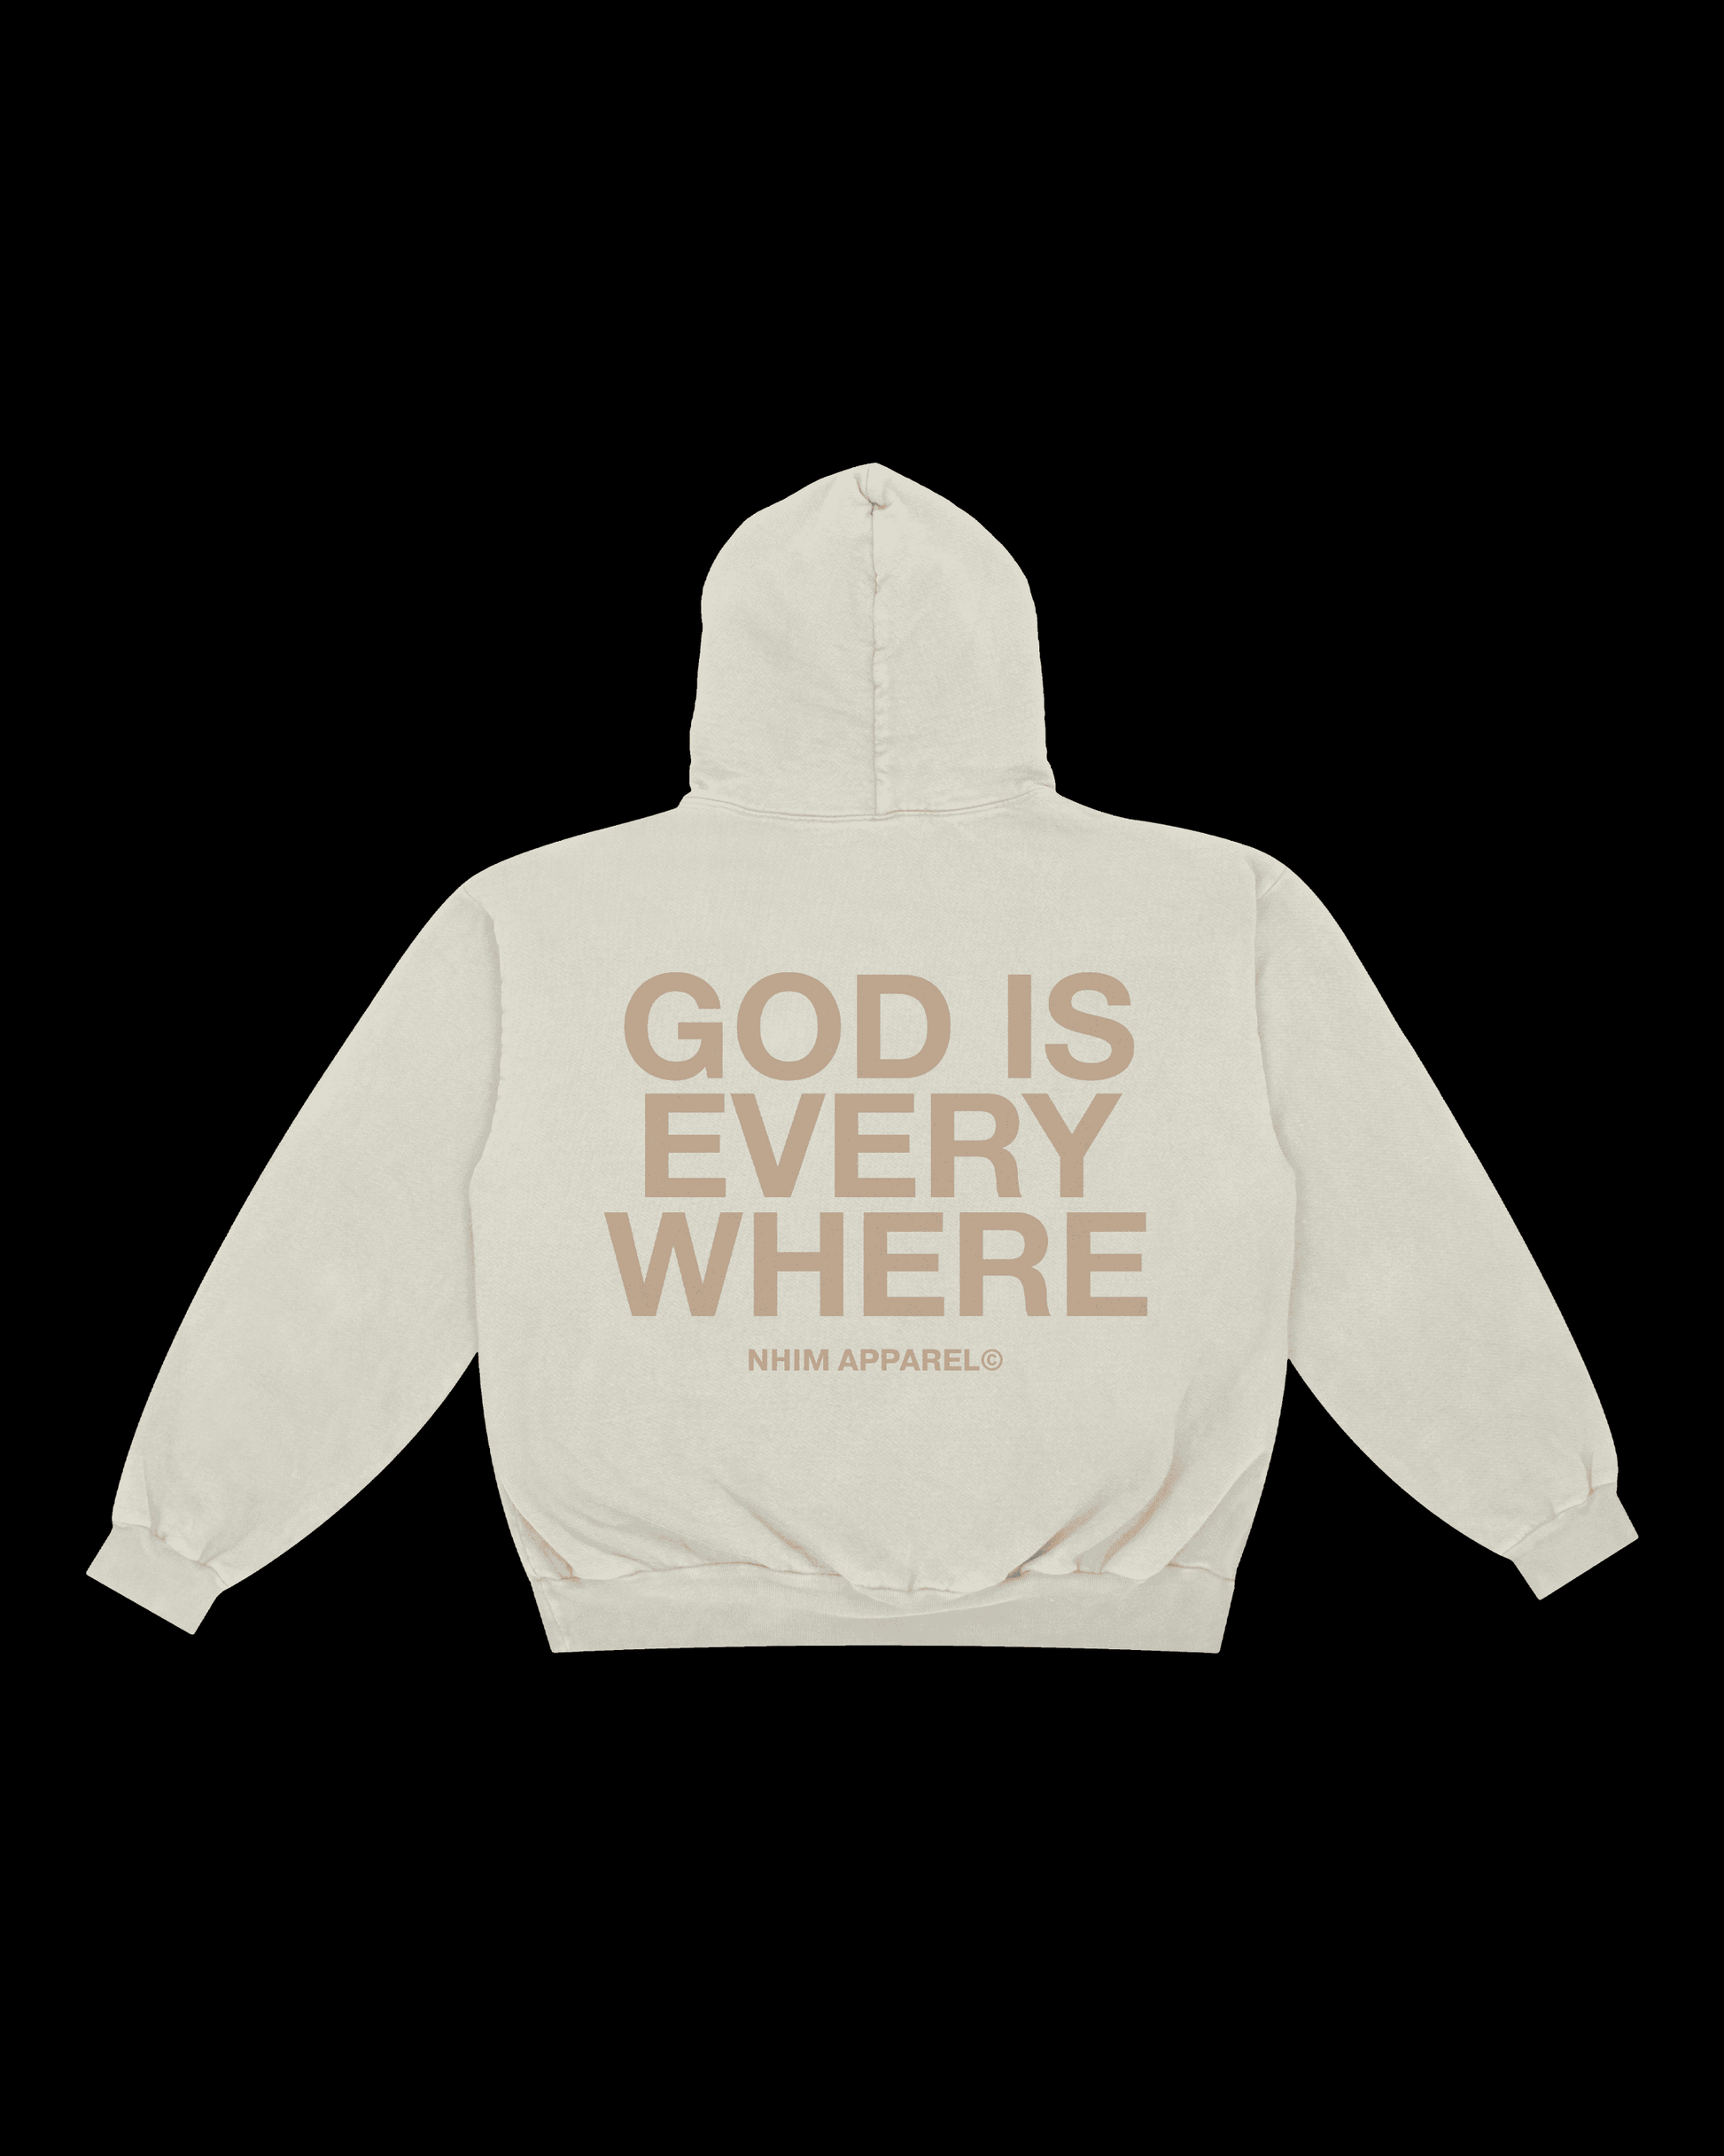 God Is Everywhere bone color hoodie sweatshirt by NHIM Apparel christian clothing brand